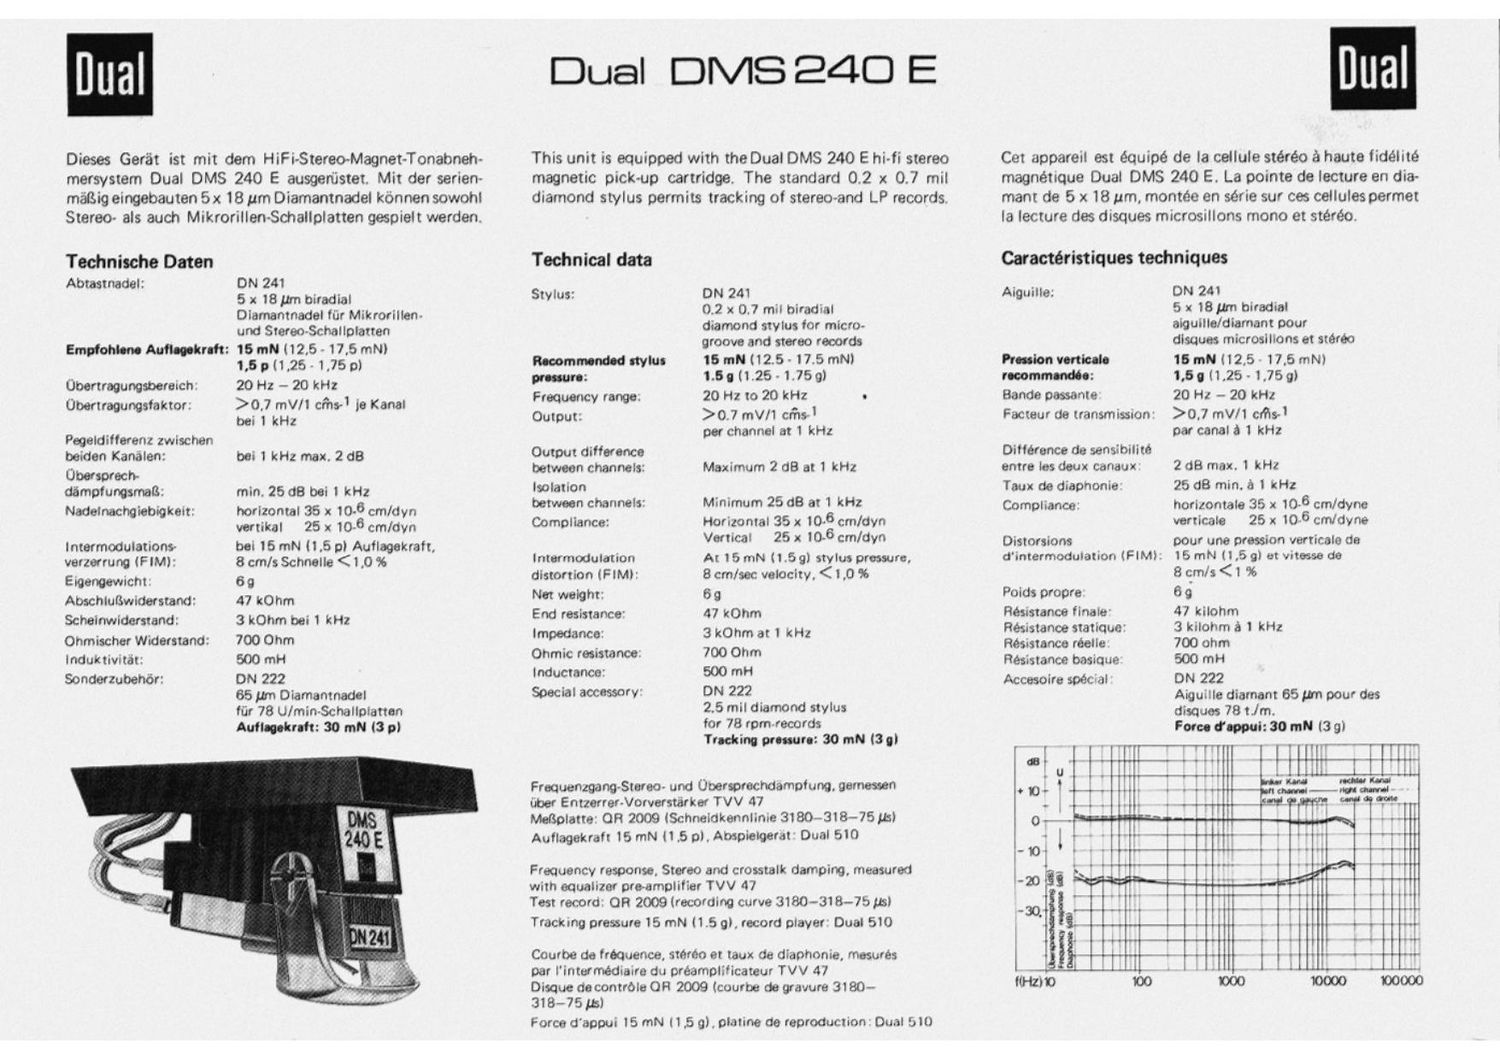 Dual DMS 240E Owners Manual